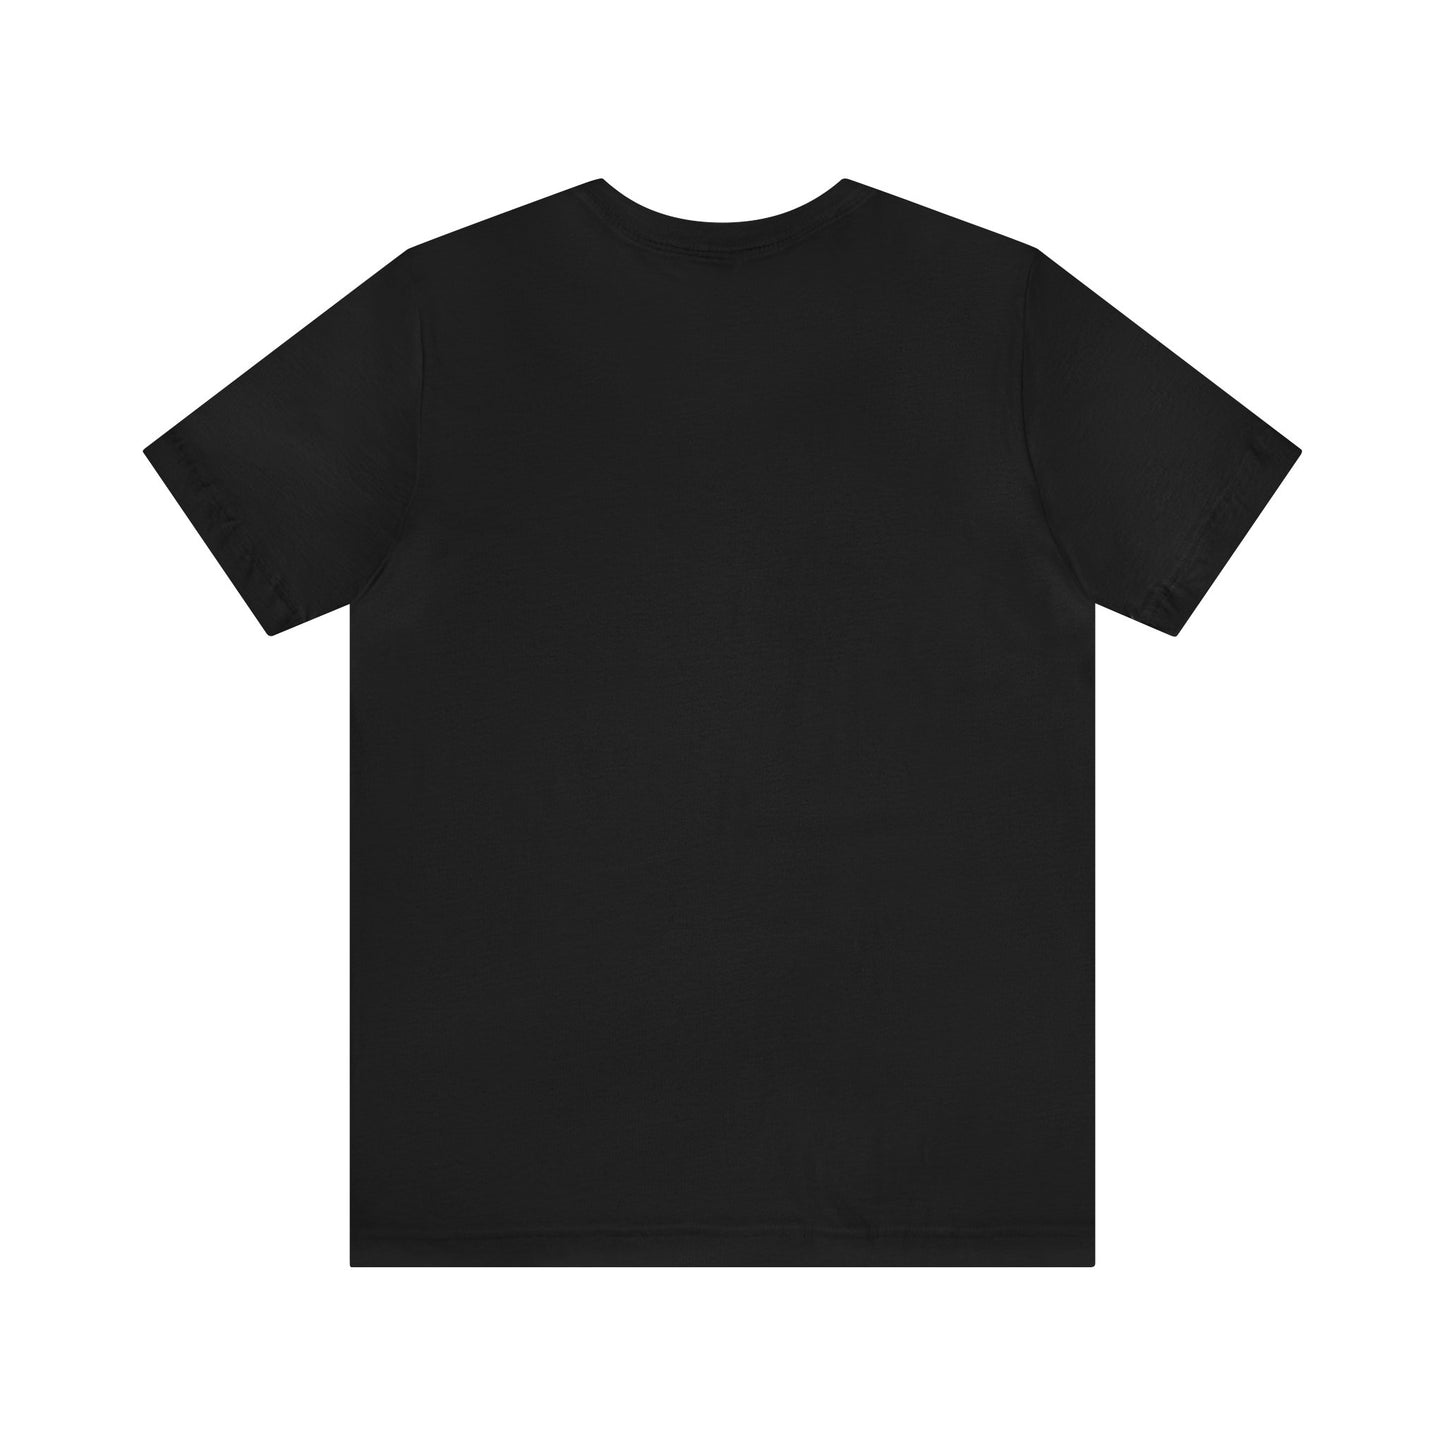 "Locs, Lipstick, & A Black Tee" T-shirt